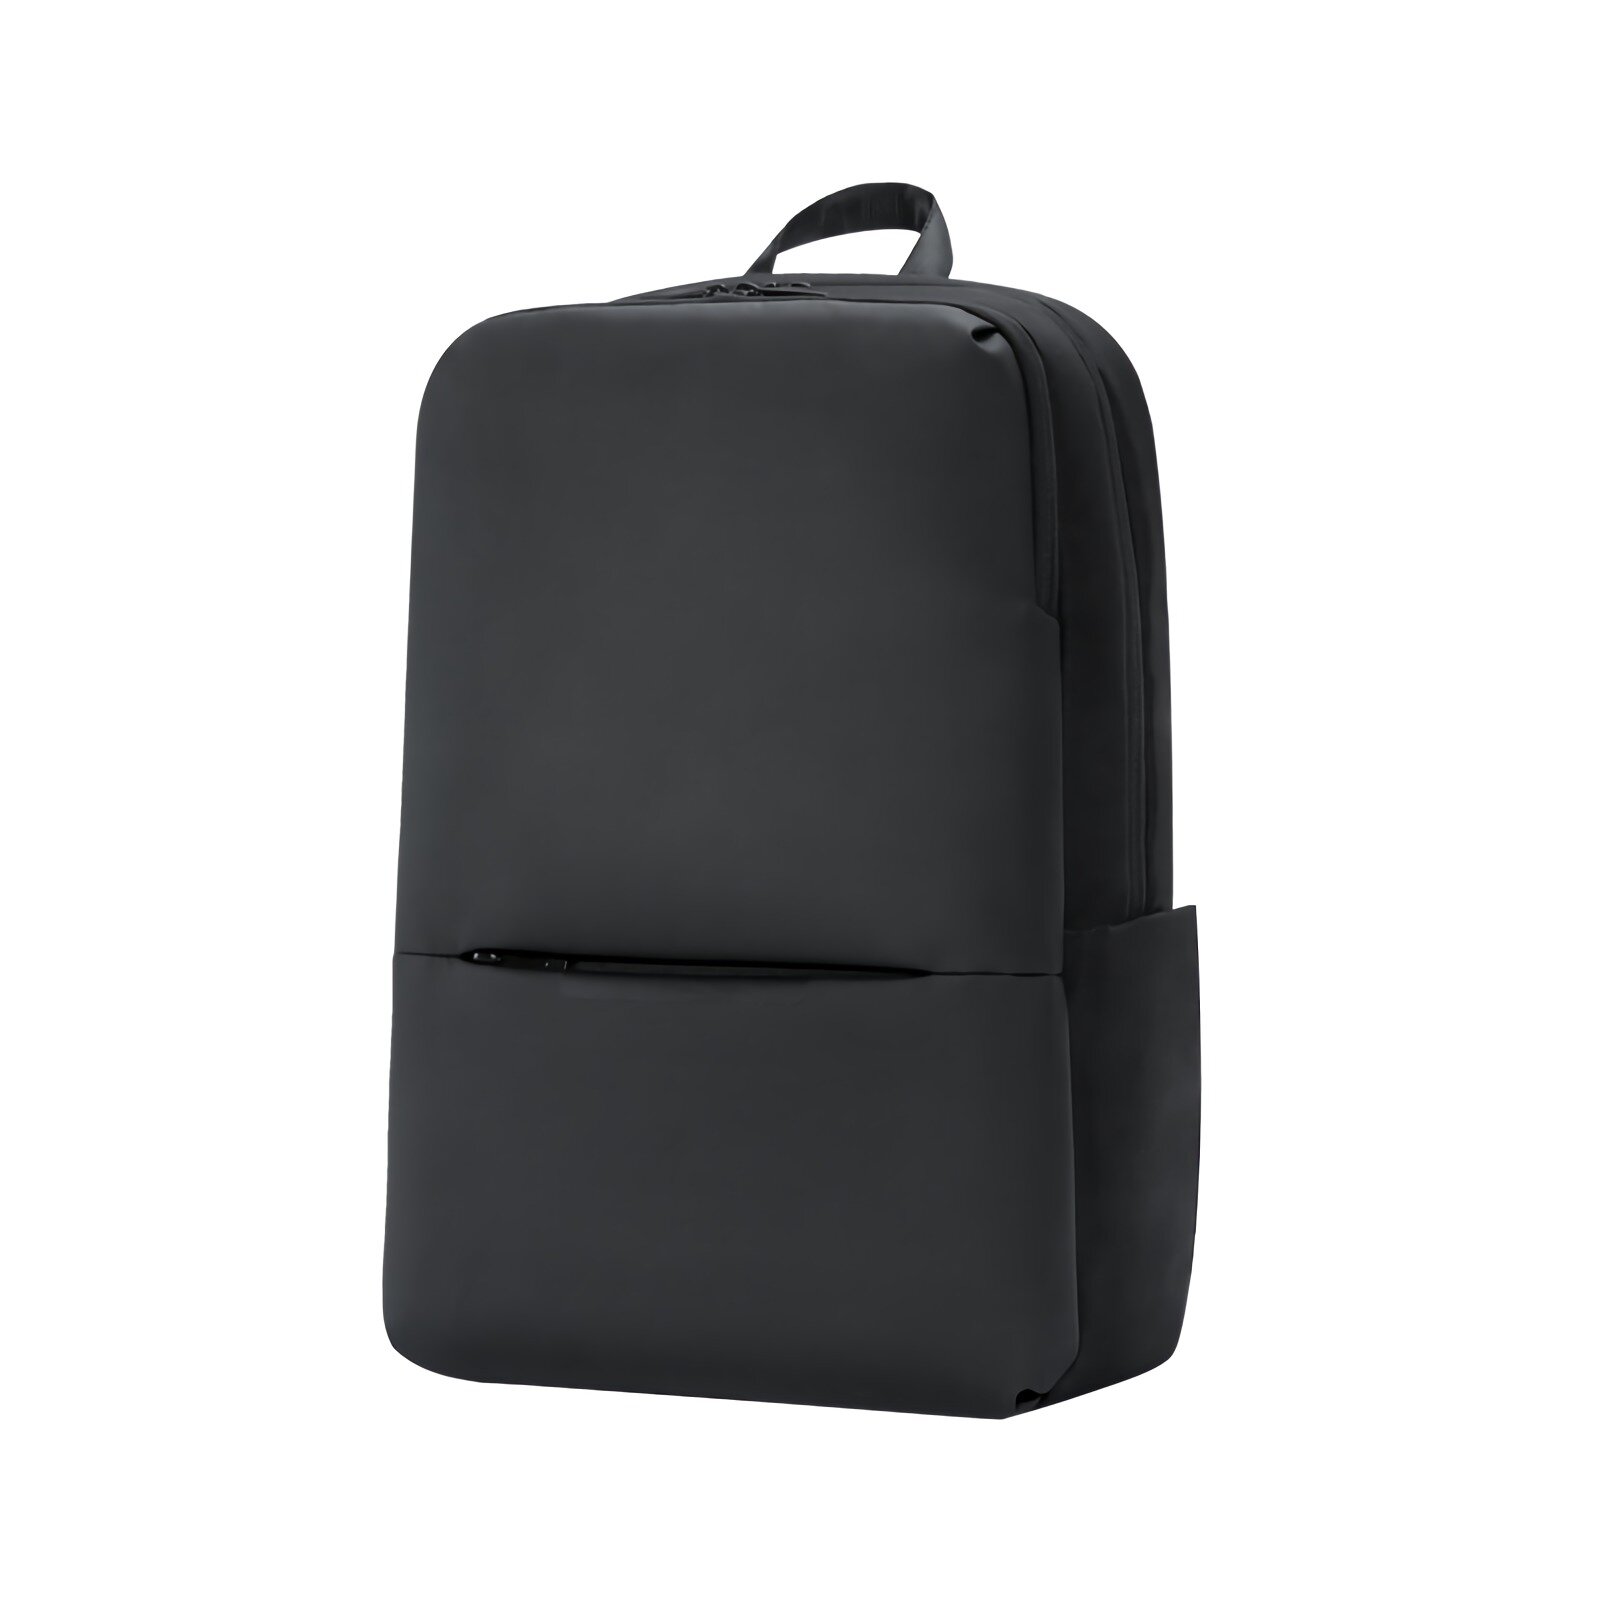 Mi Classic Zakelijke rugzak 2 15,6-inch laptoprugzak Meerlagige 18L tas met grote capaciteit Oxford-